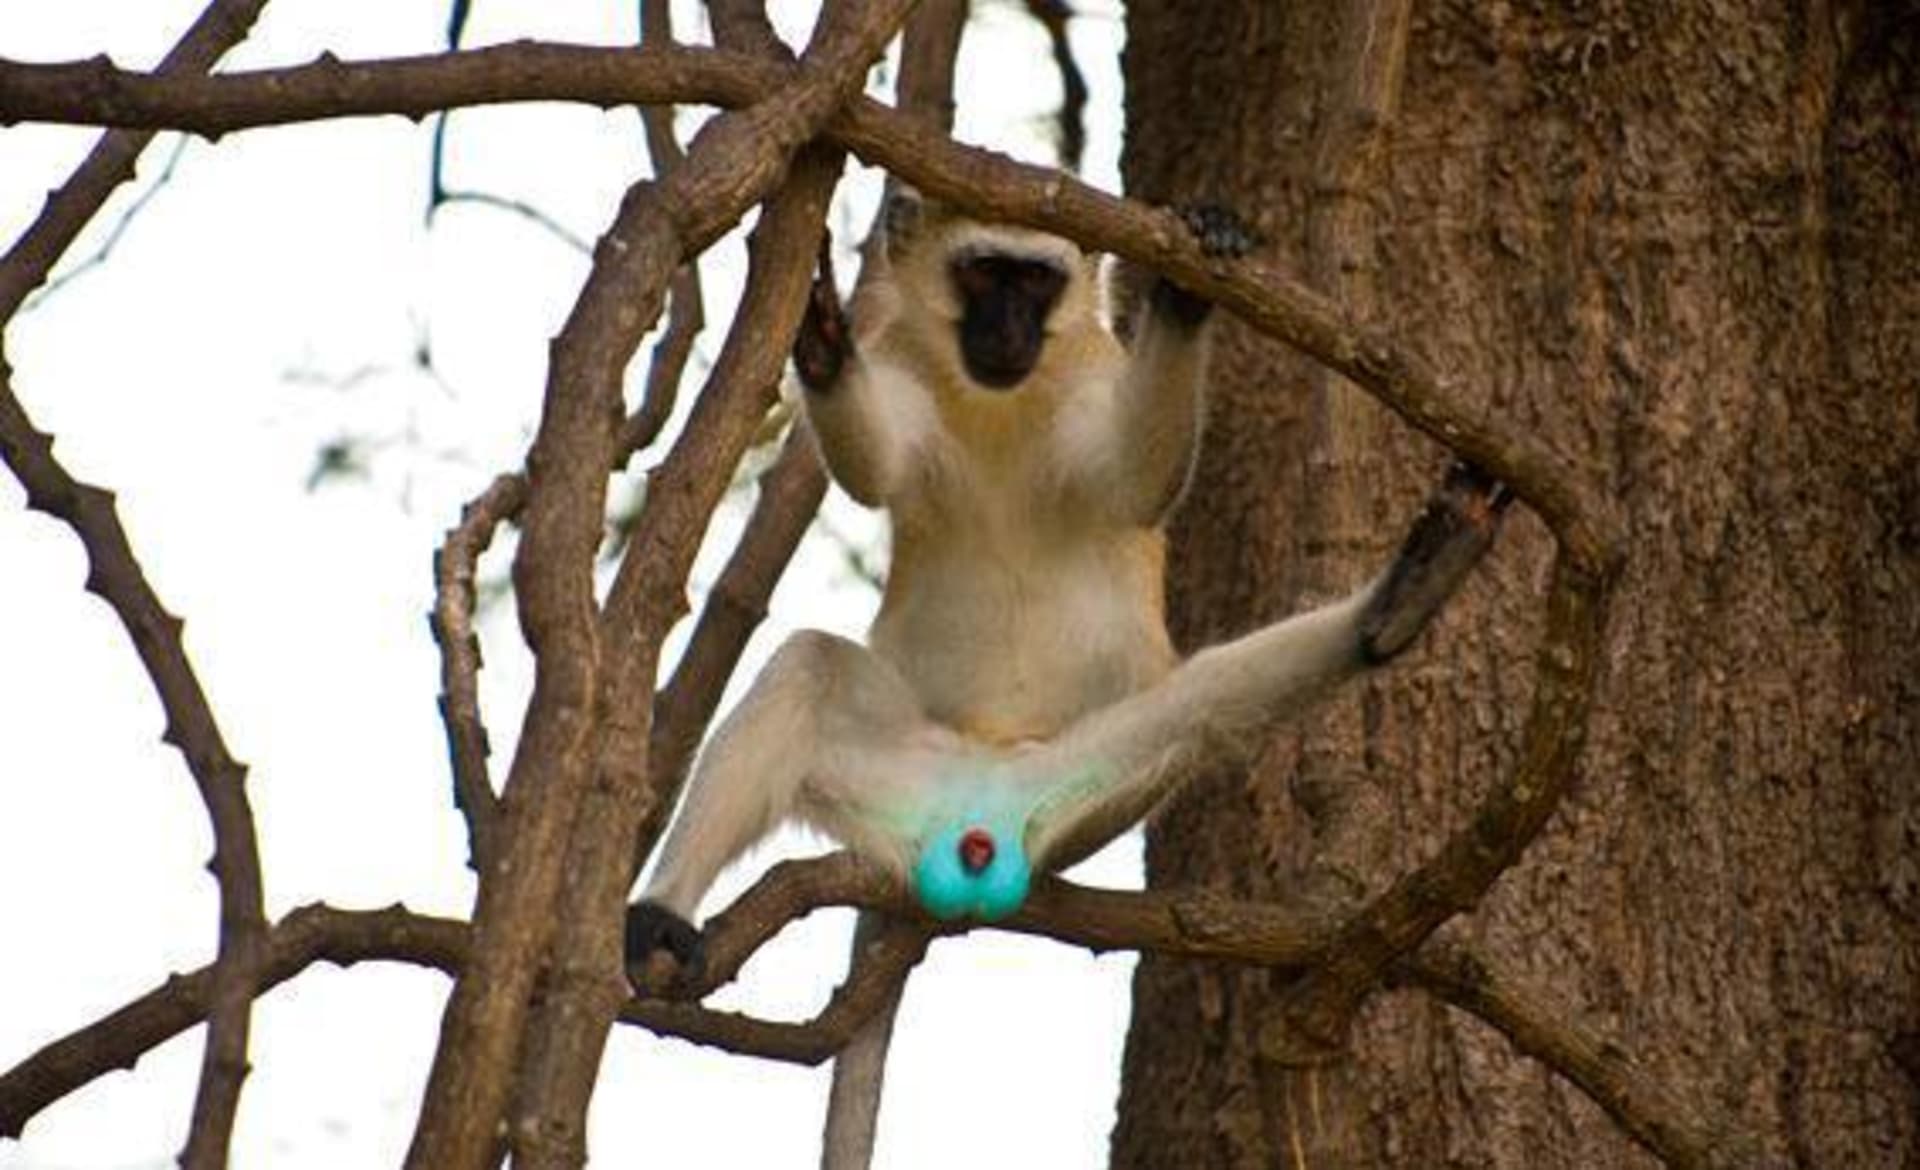 Opice s modrými varlaty